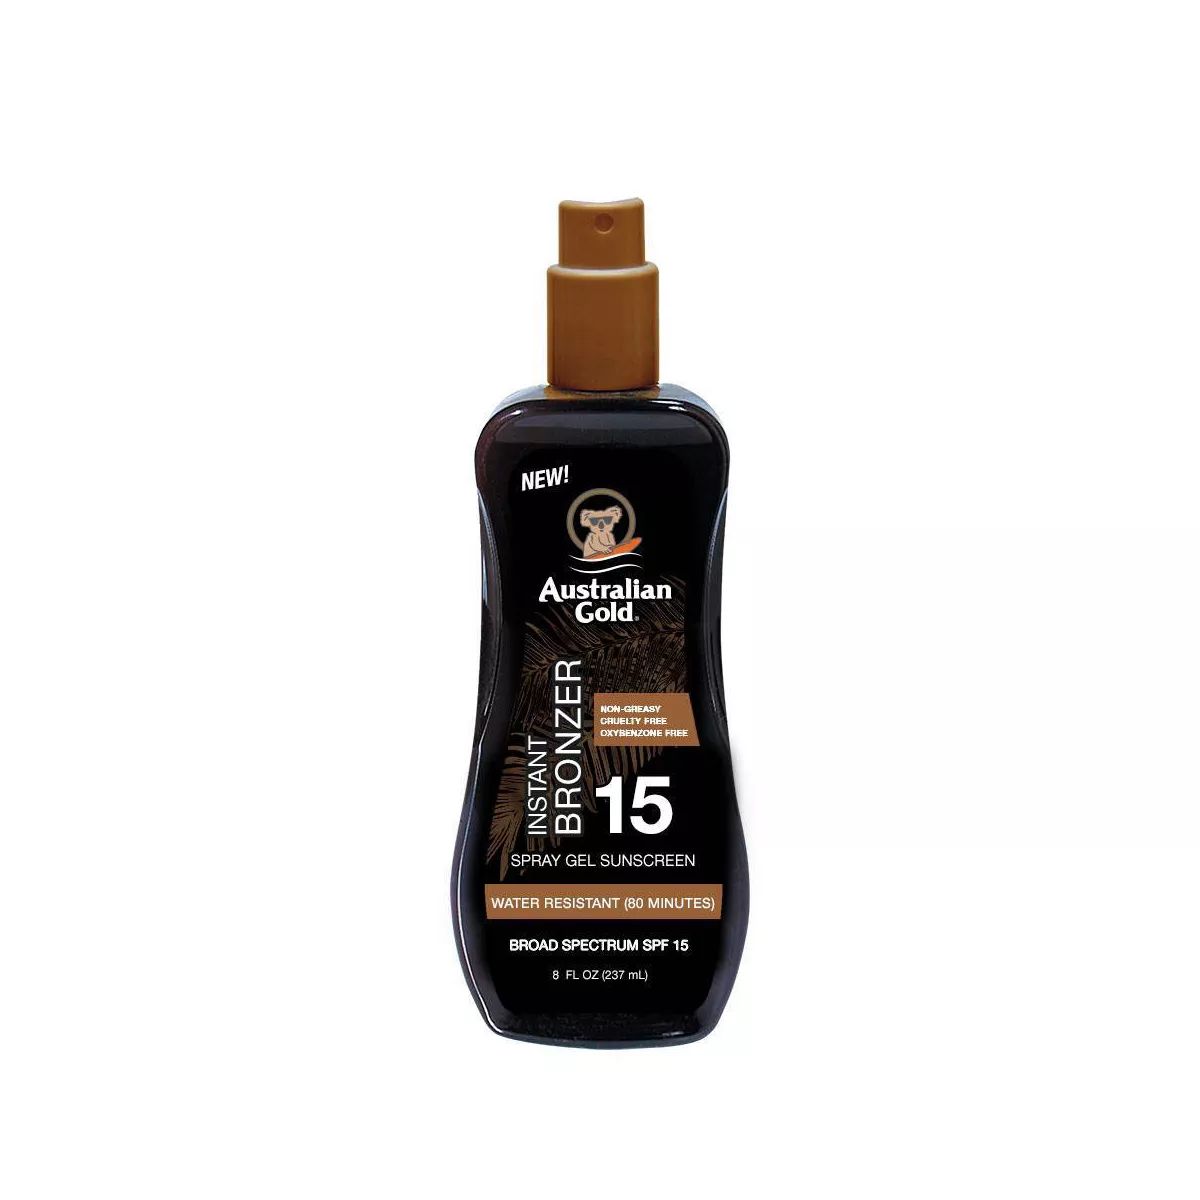 Australian Gold Sunscreen Spray Gel with Instant Bronzer - 8 fl oz | Target